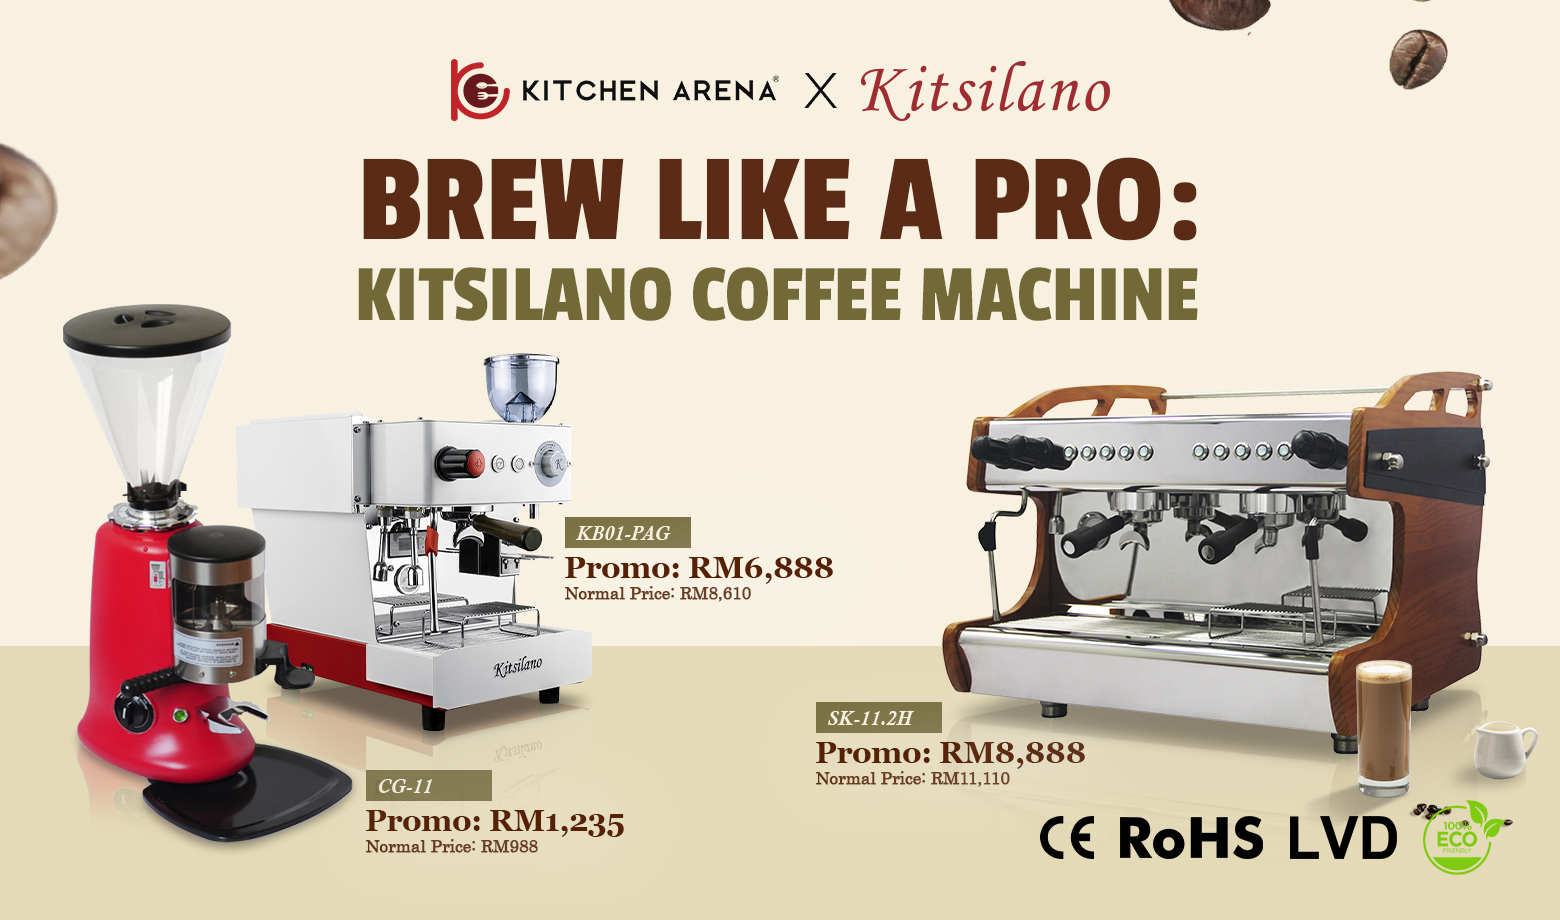 Kitsilano Coffee Machine